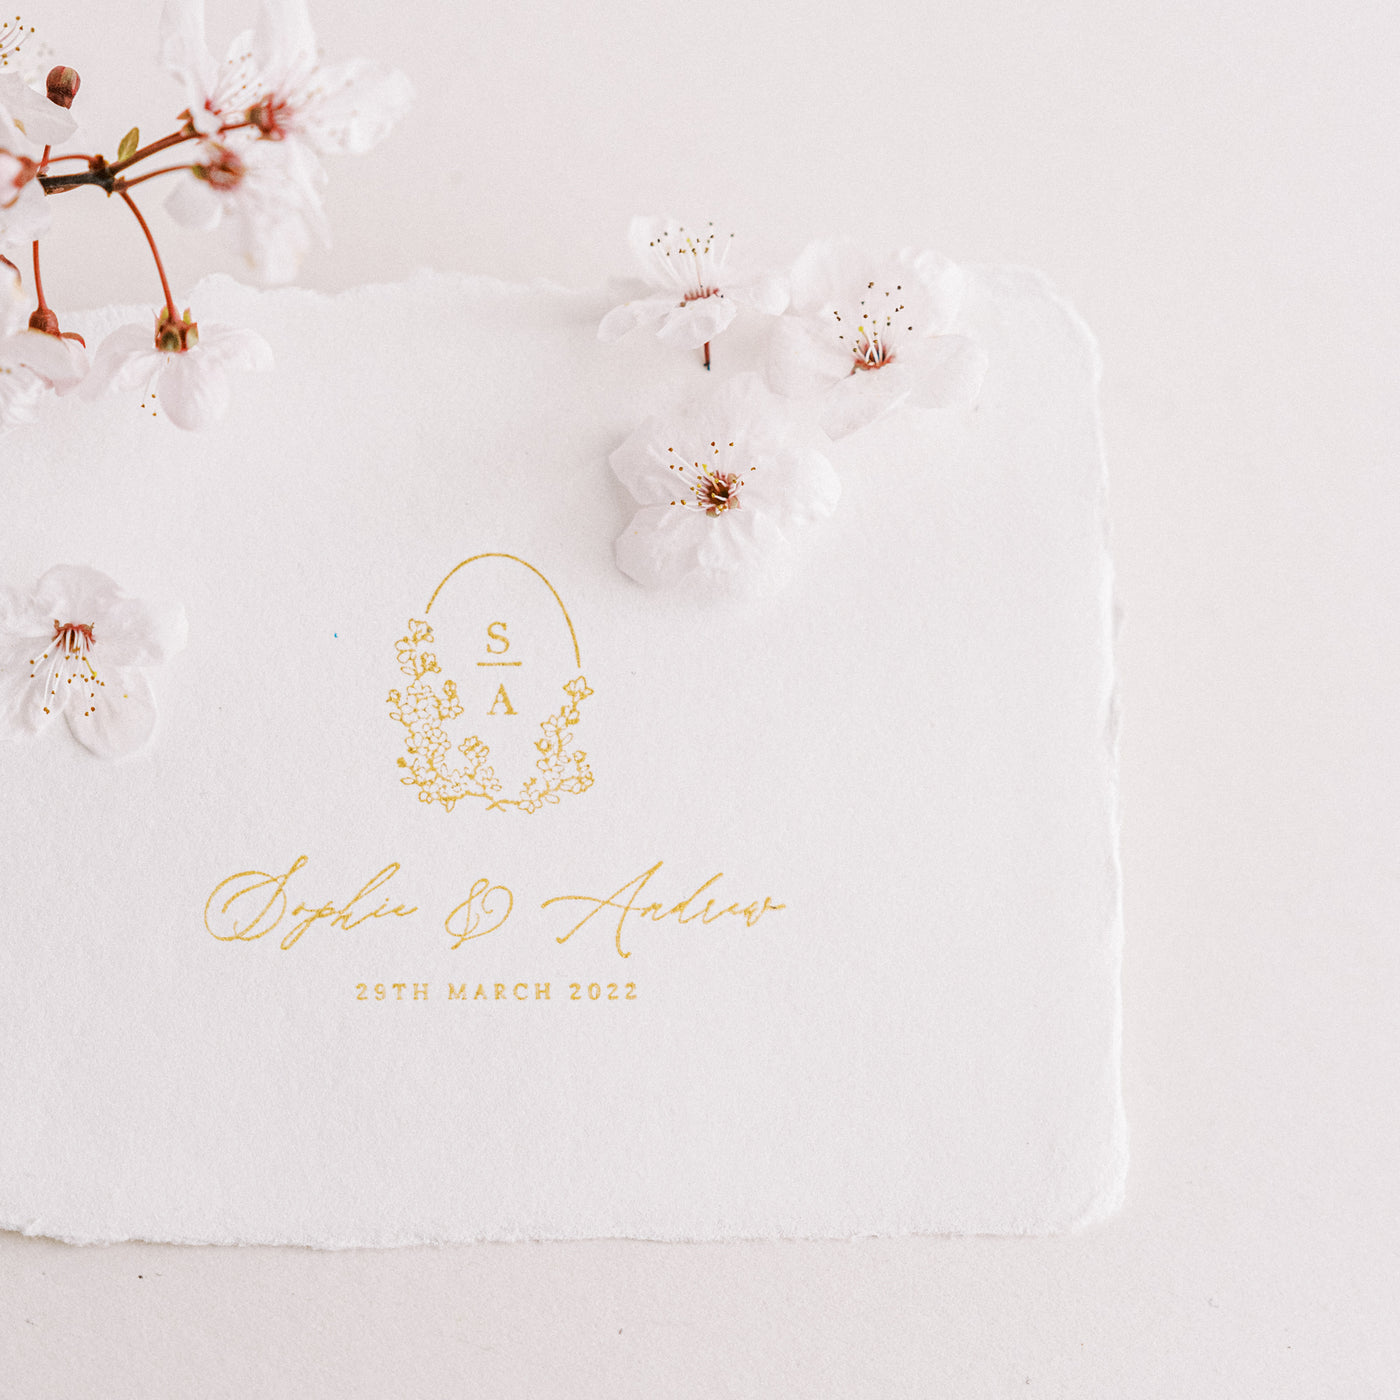 Cherri Cherry Blossom Save The Date Rubber Stamp Design | 'Sakura' Cherry Blossom Embellishments for Blush Pink Spring Wedding | Heirloom Seals